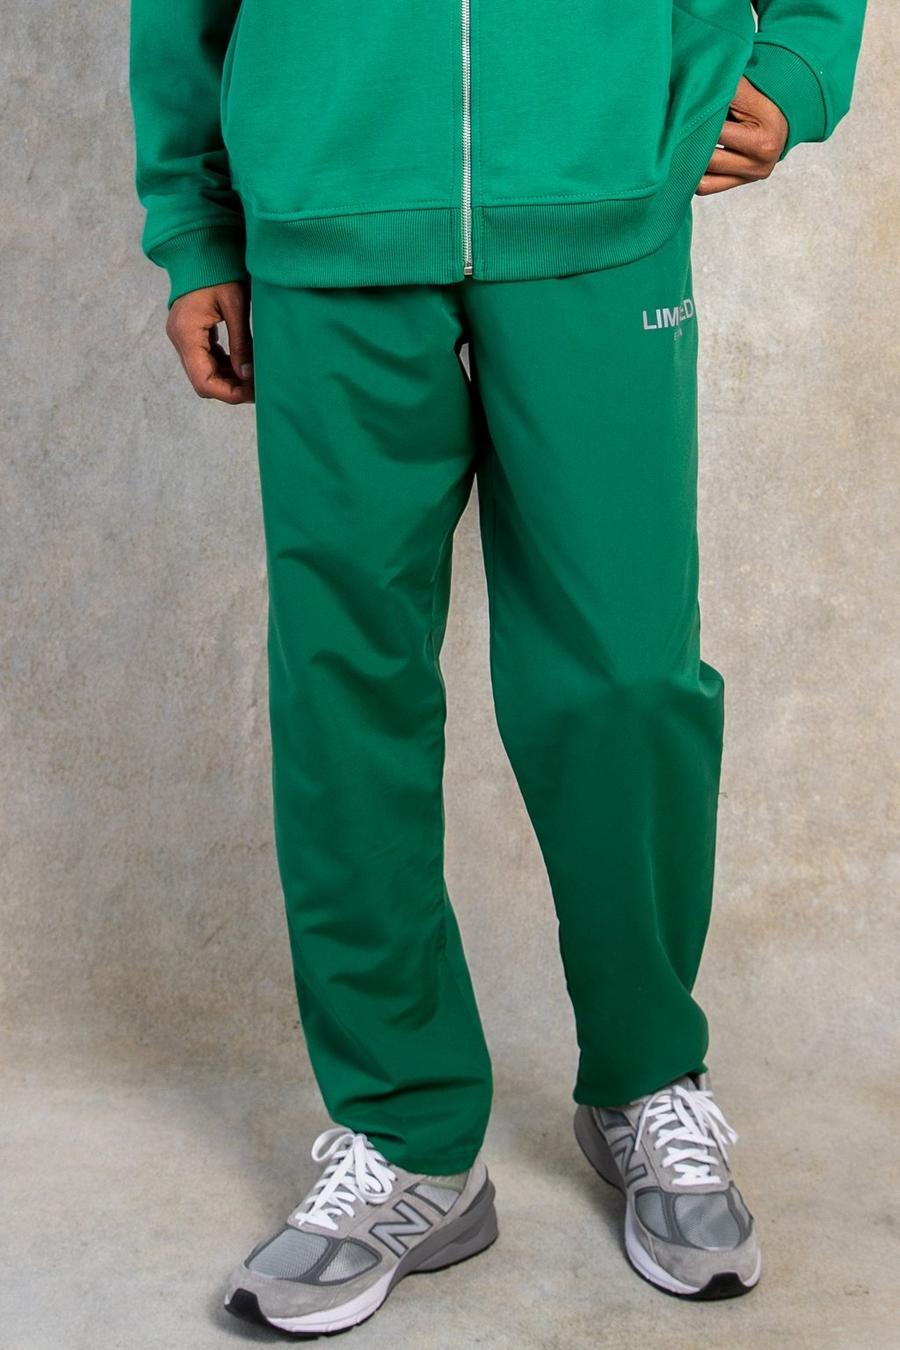 Pantaloni dritti Limited in Shell effetto velluto, Green verde